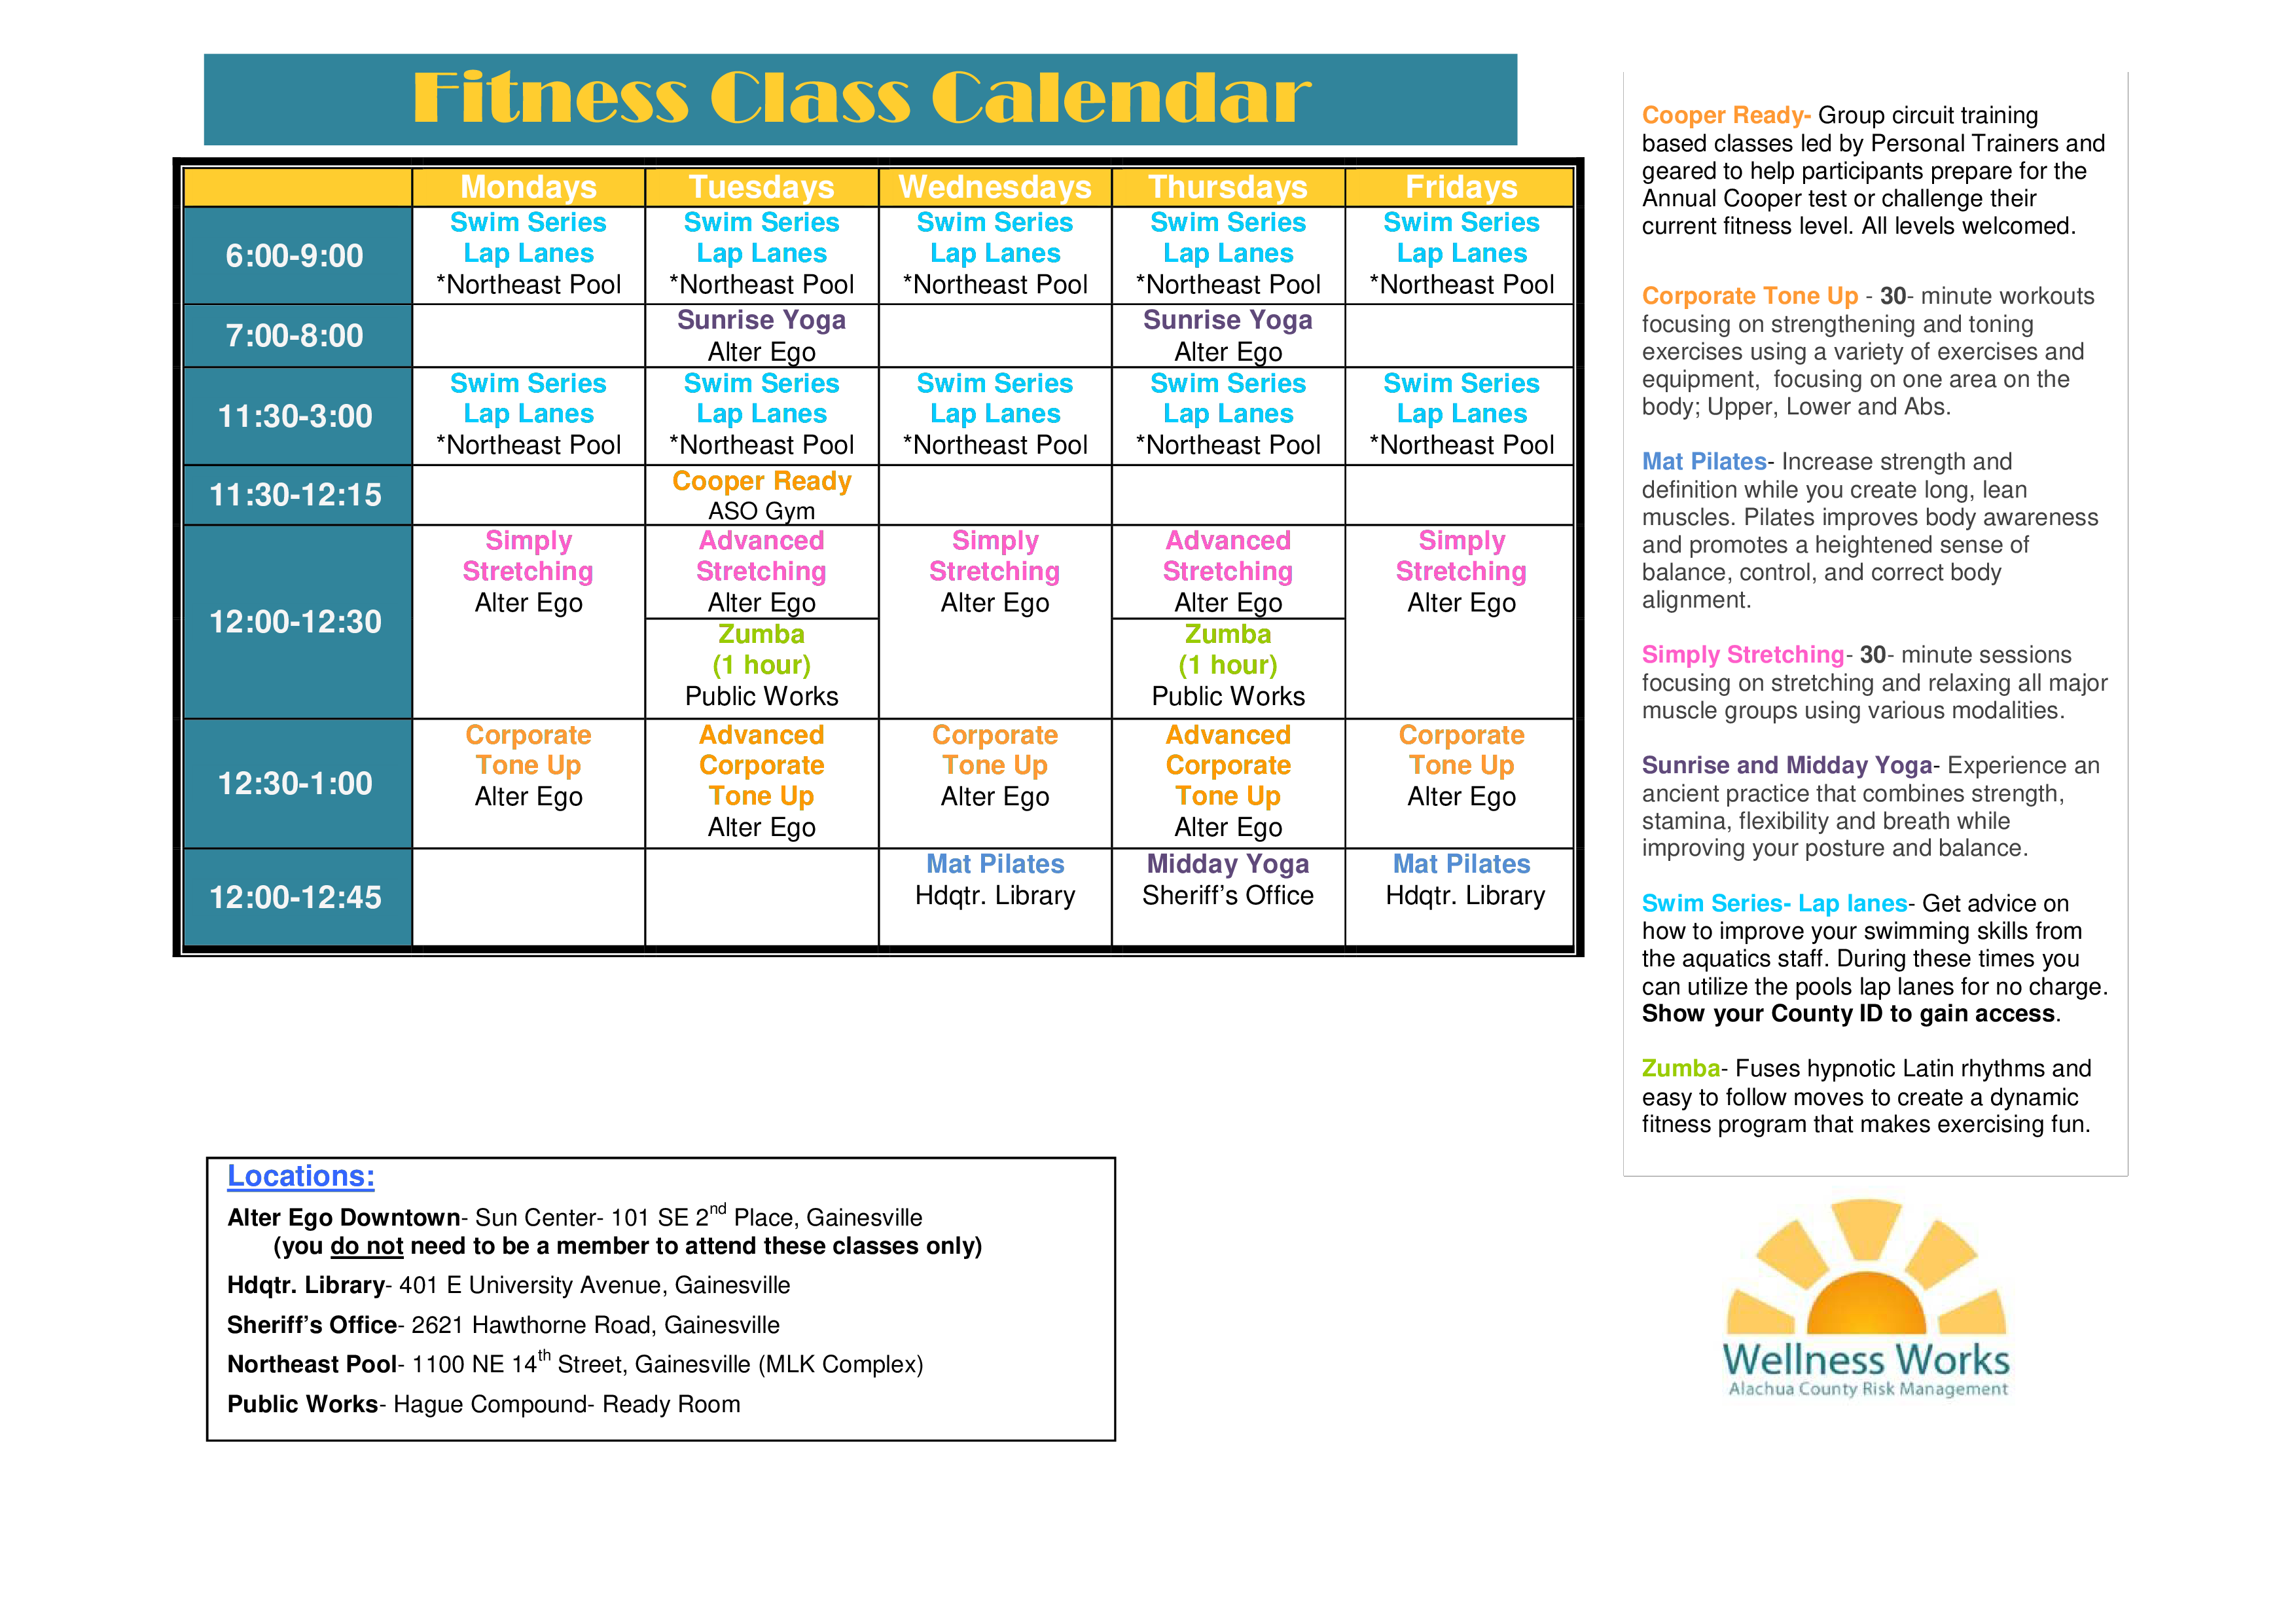 Fitness Calendar Sample main image